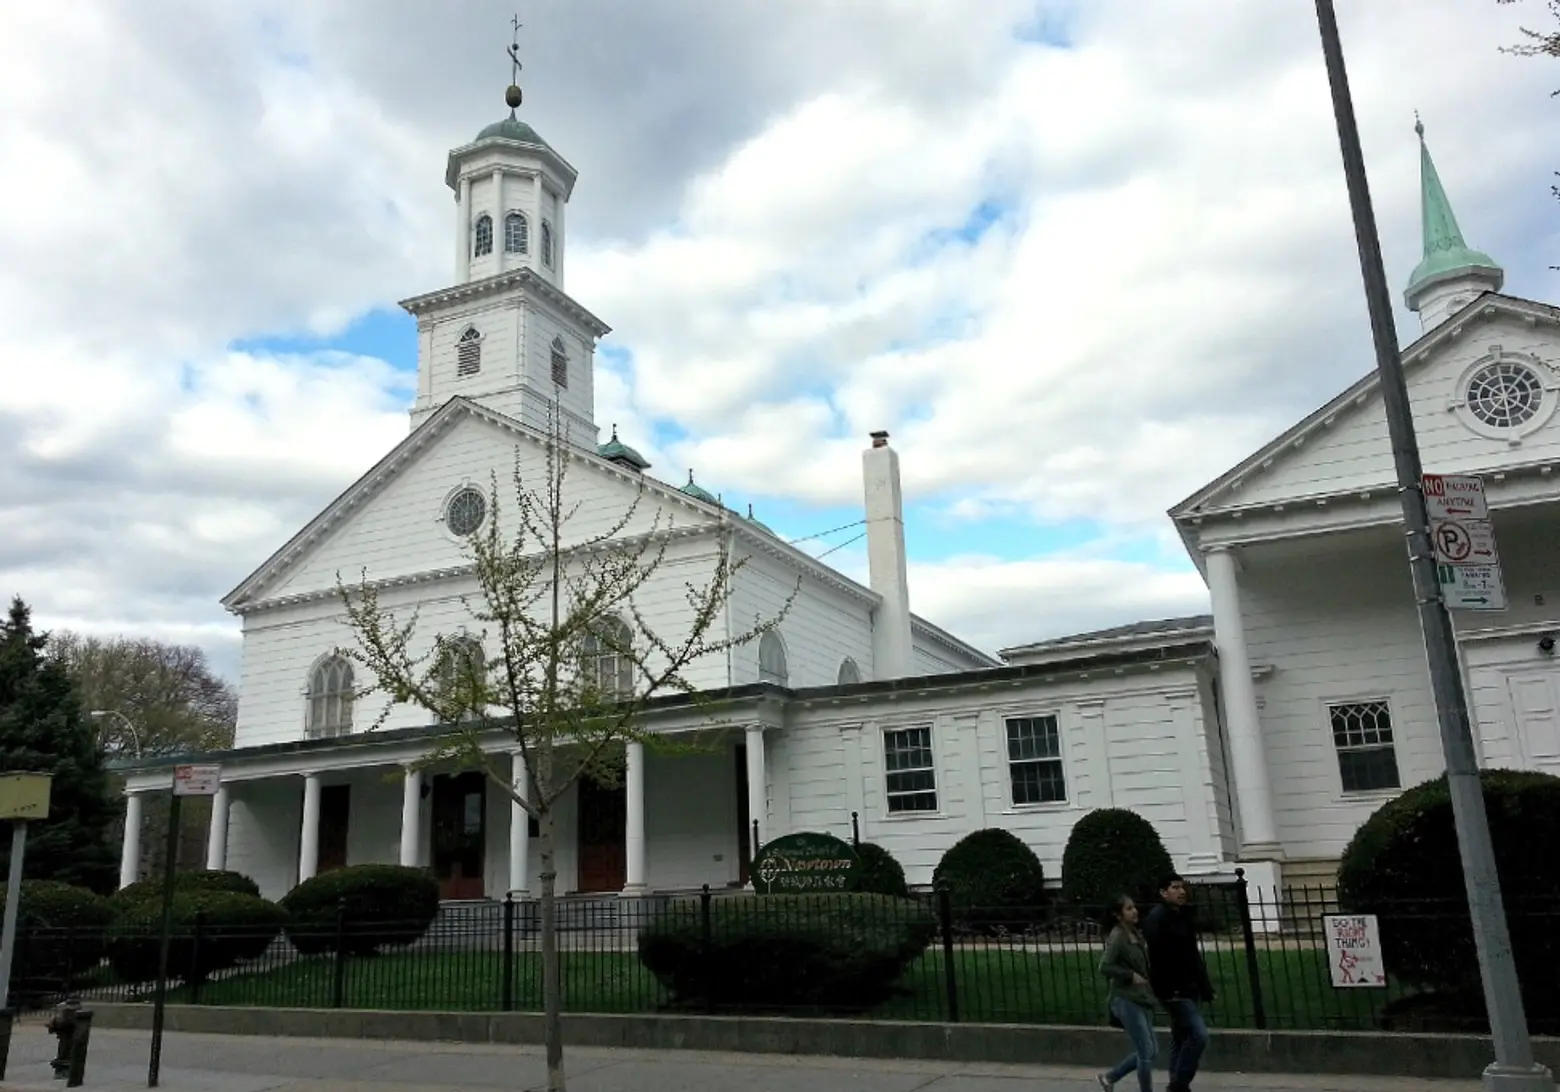 Reformed Dutch Church of Newtown, Elmhurst Queens